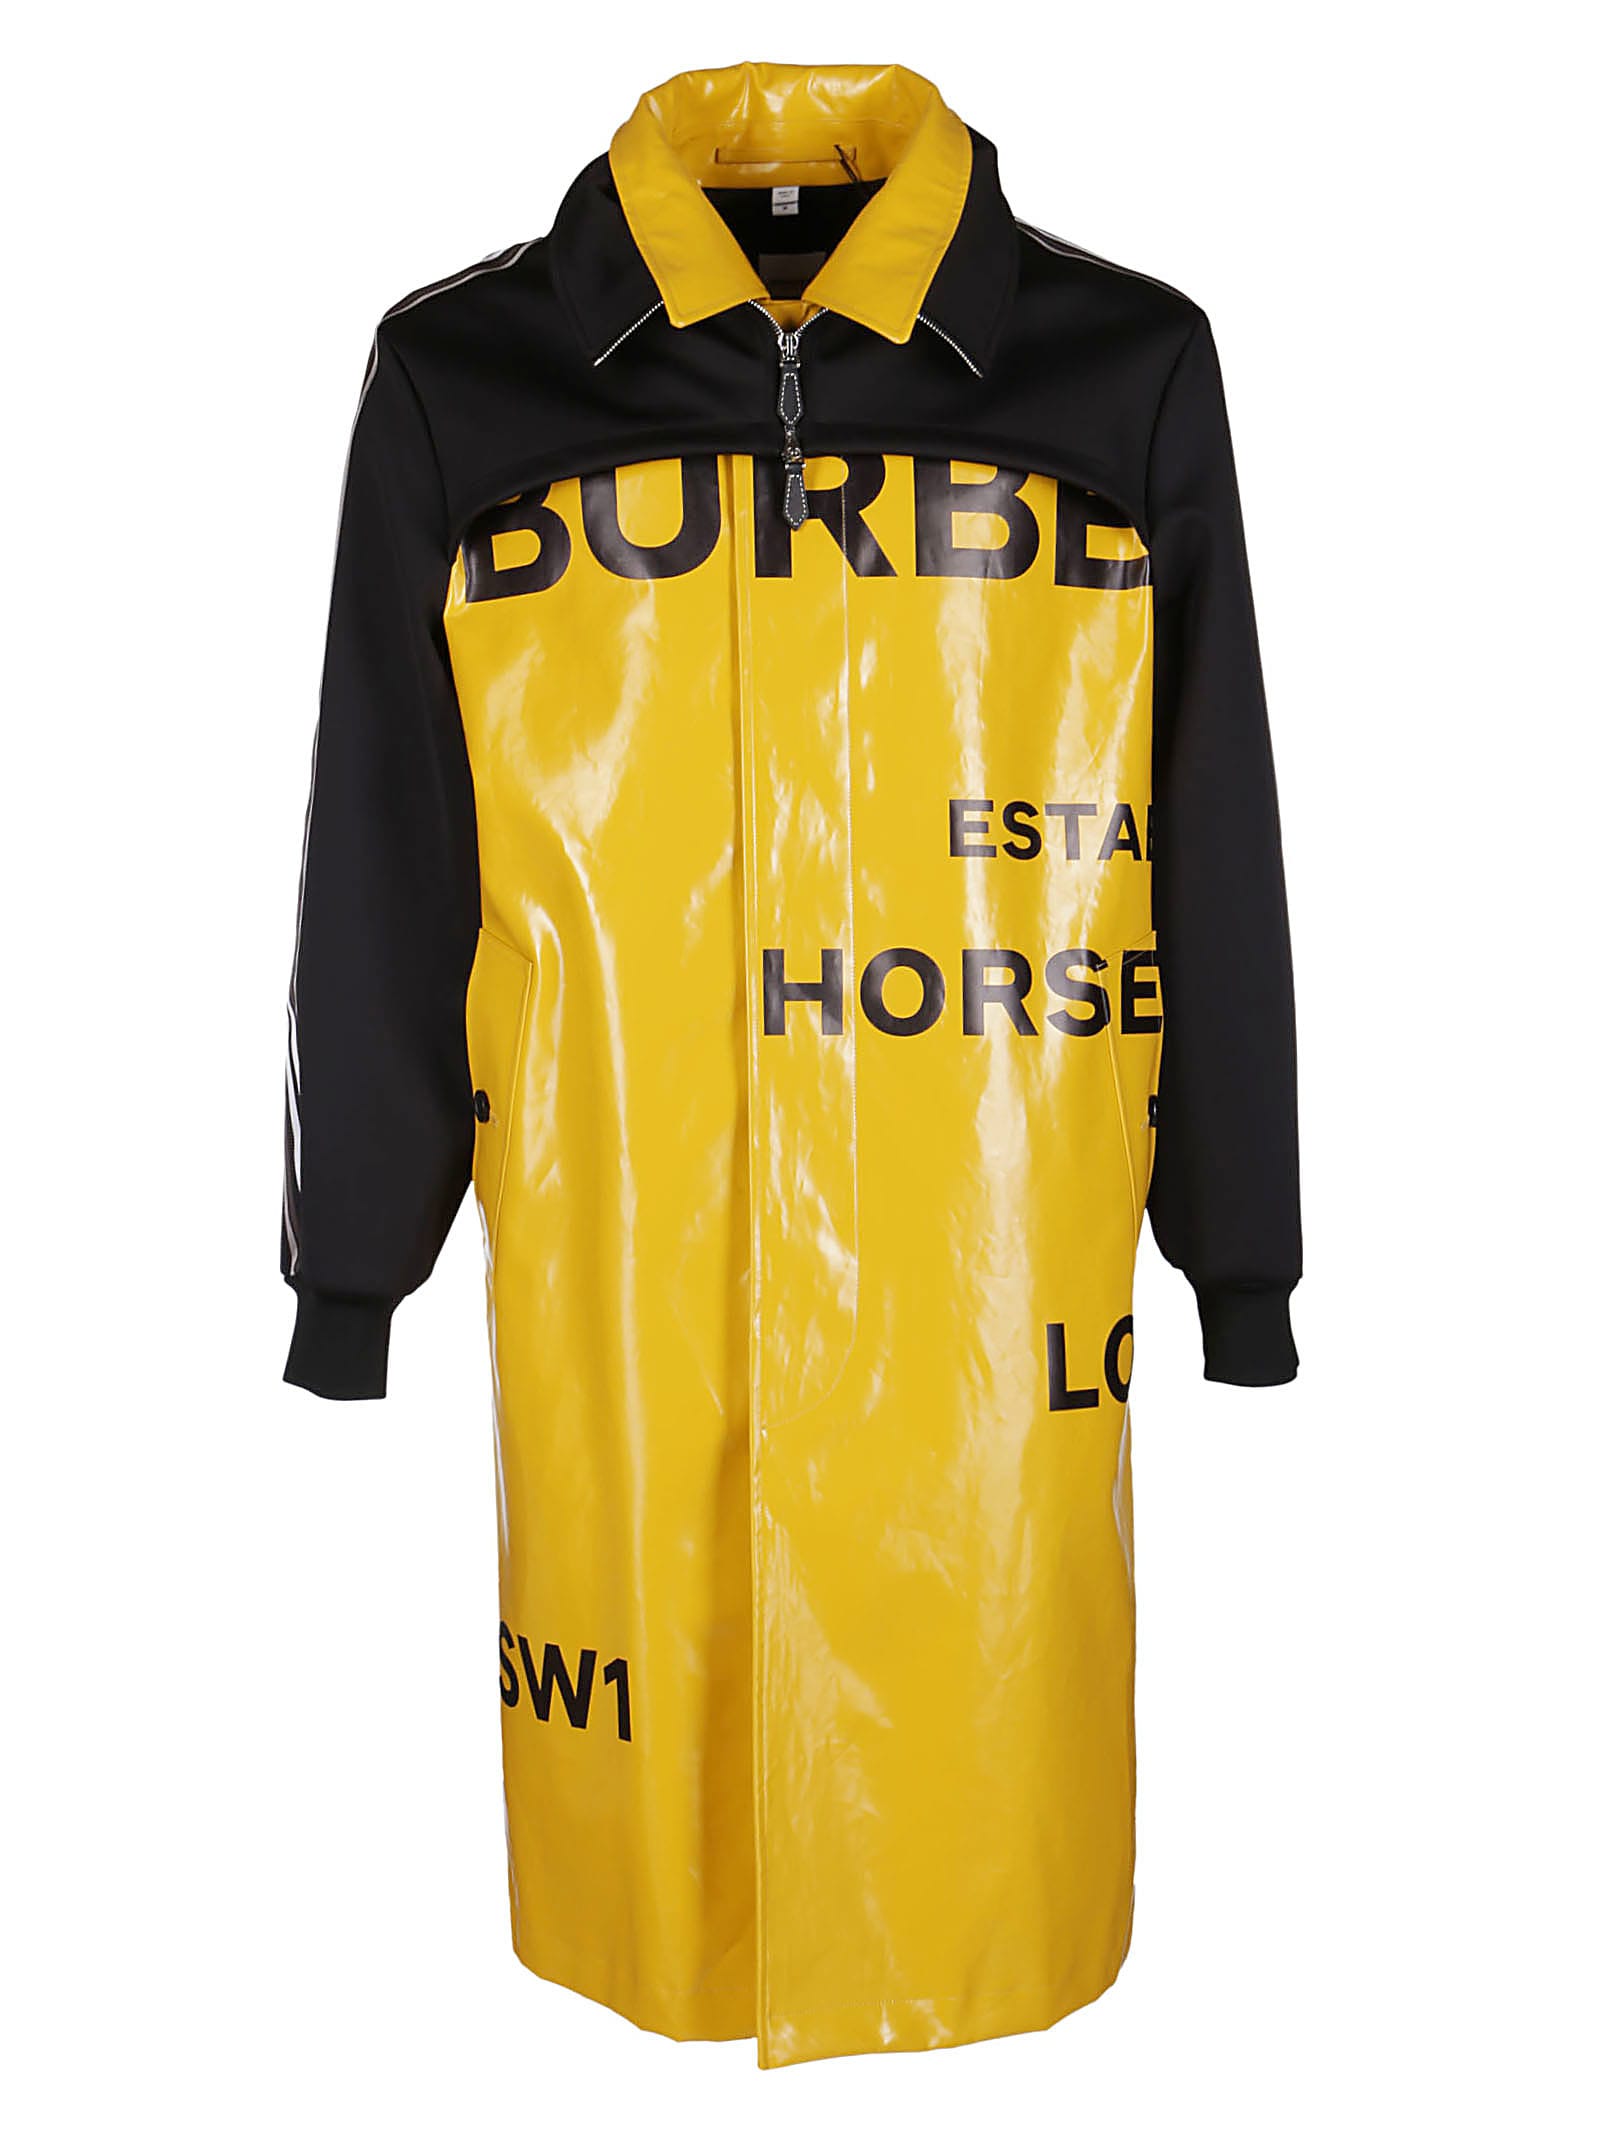 Burberry Balck And Yellow Raincoat In 